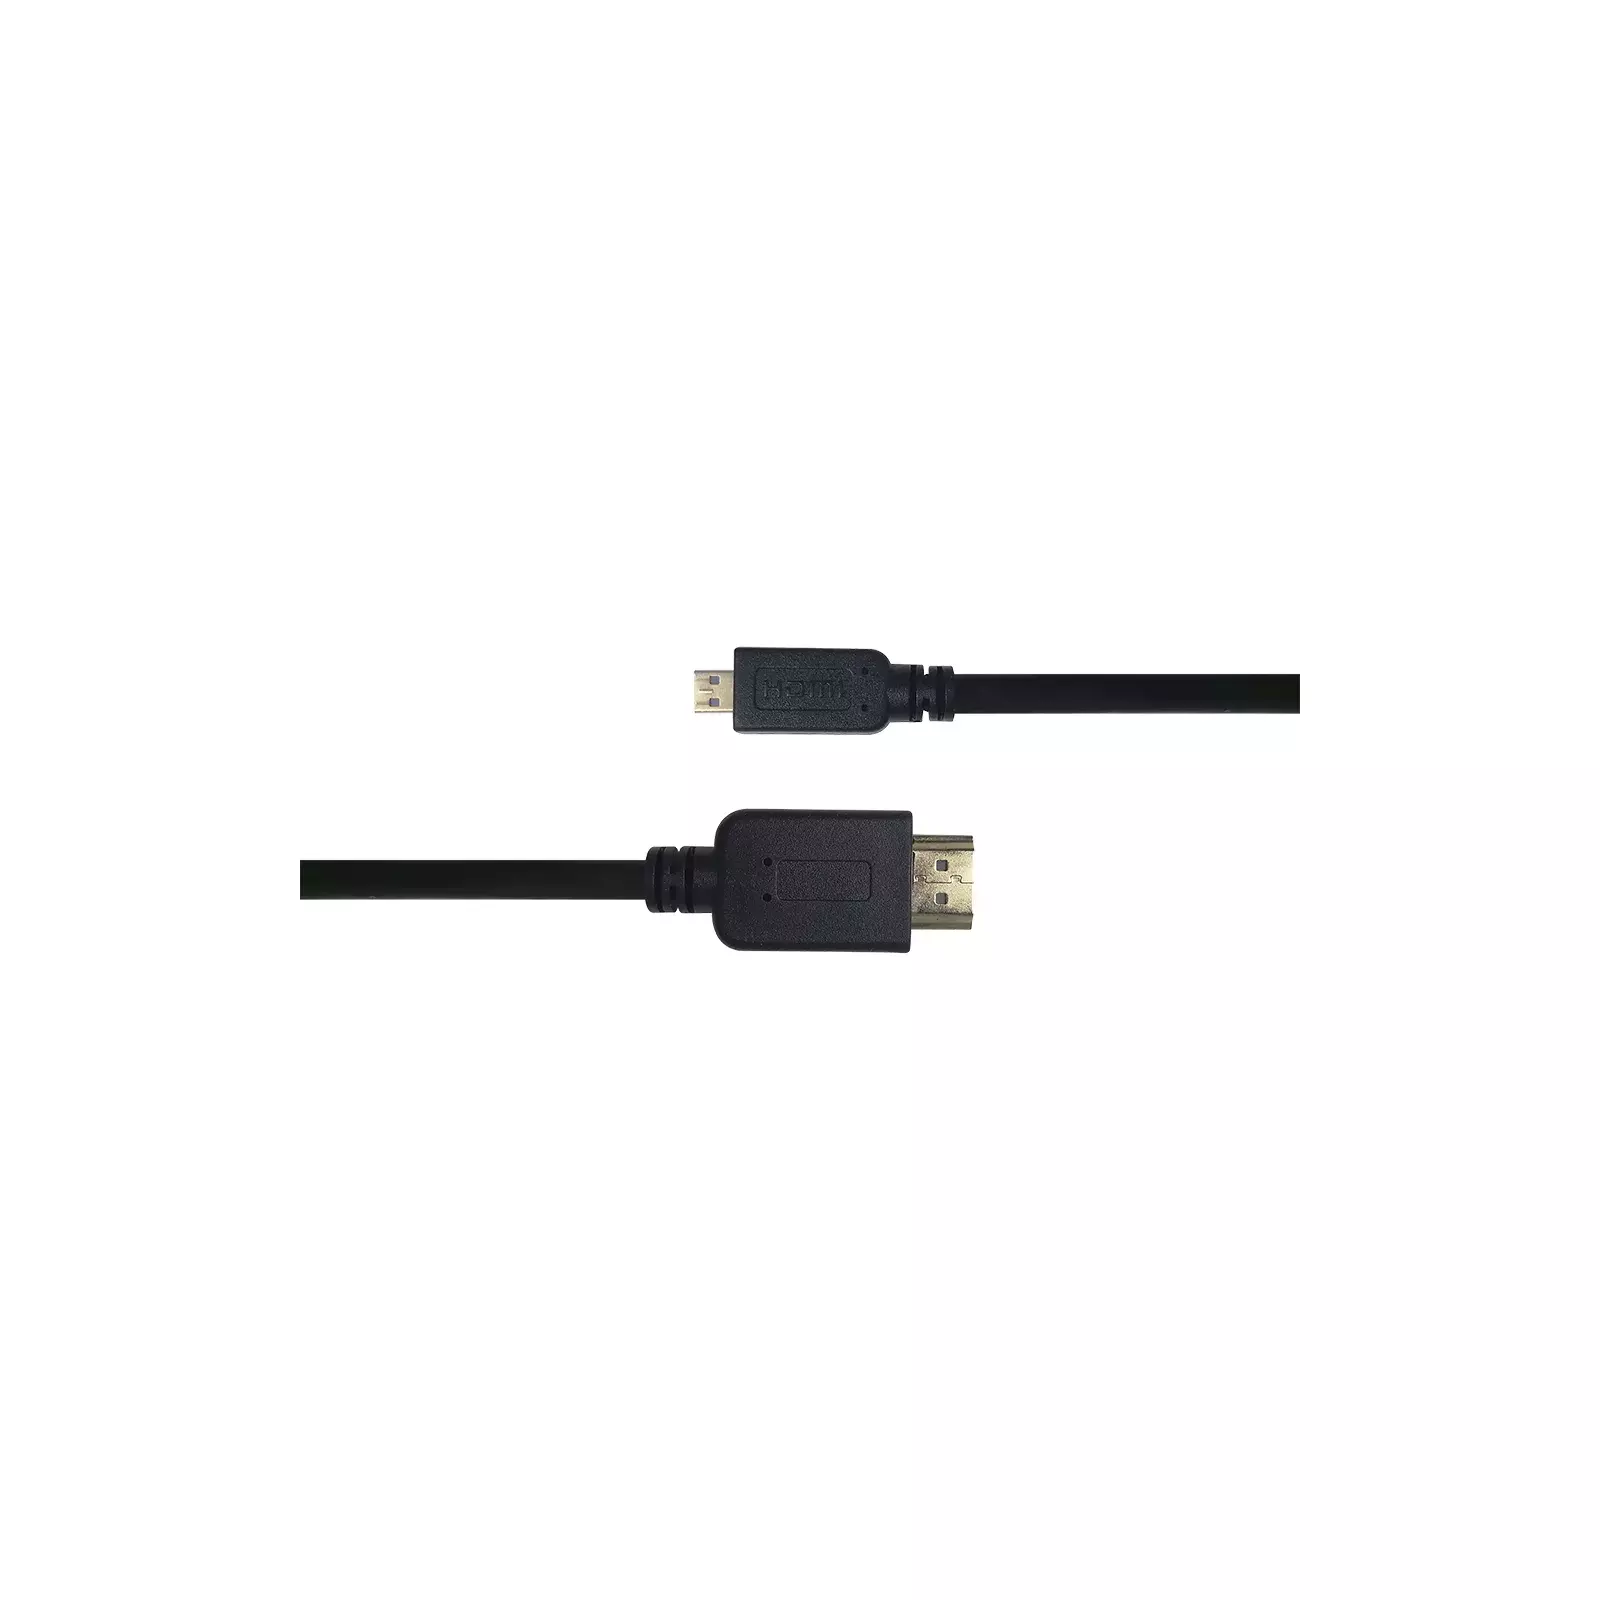 Deltaco HDMI Cable to Mini-HDMI Cable, 4K - 2 Meter 